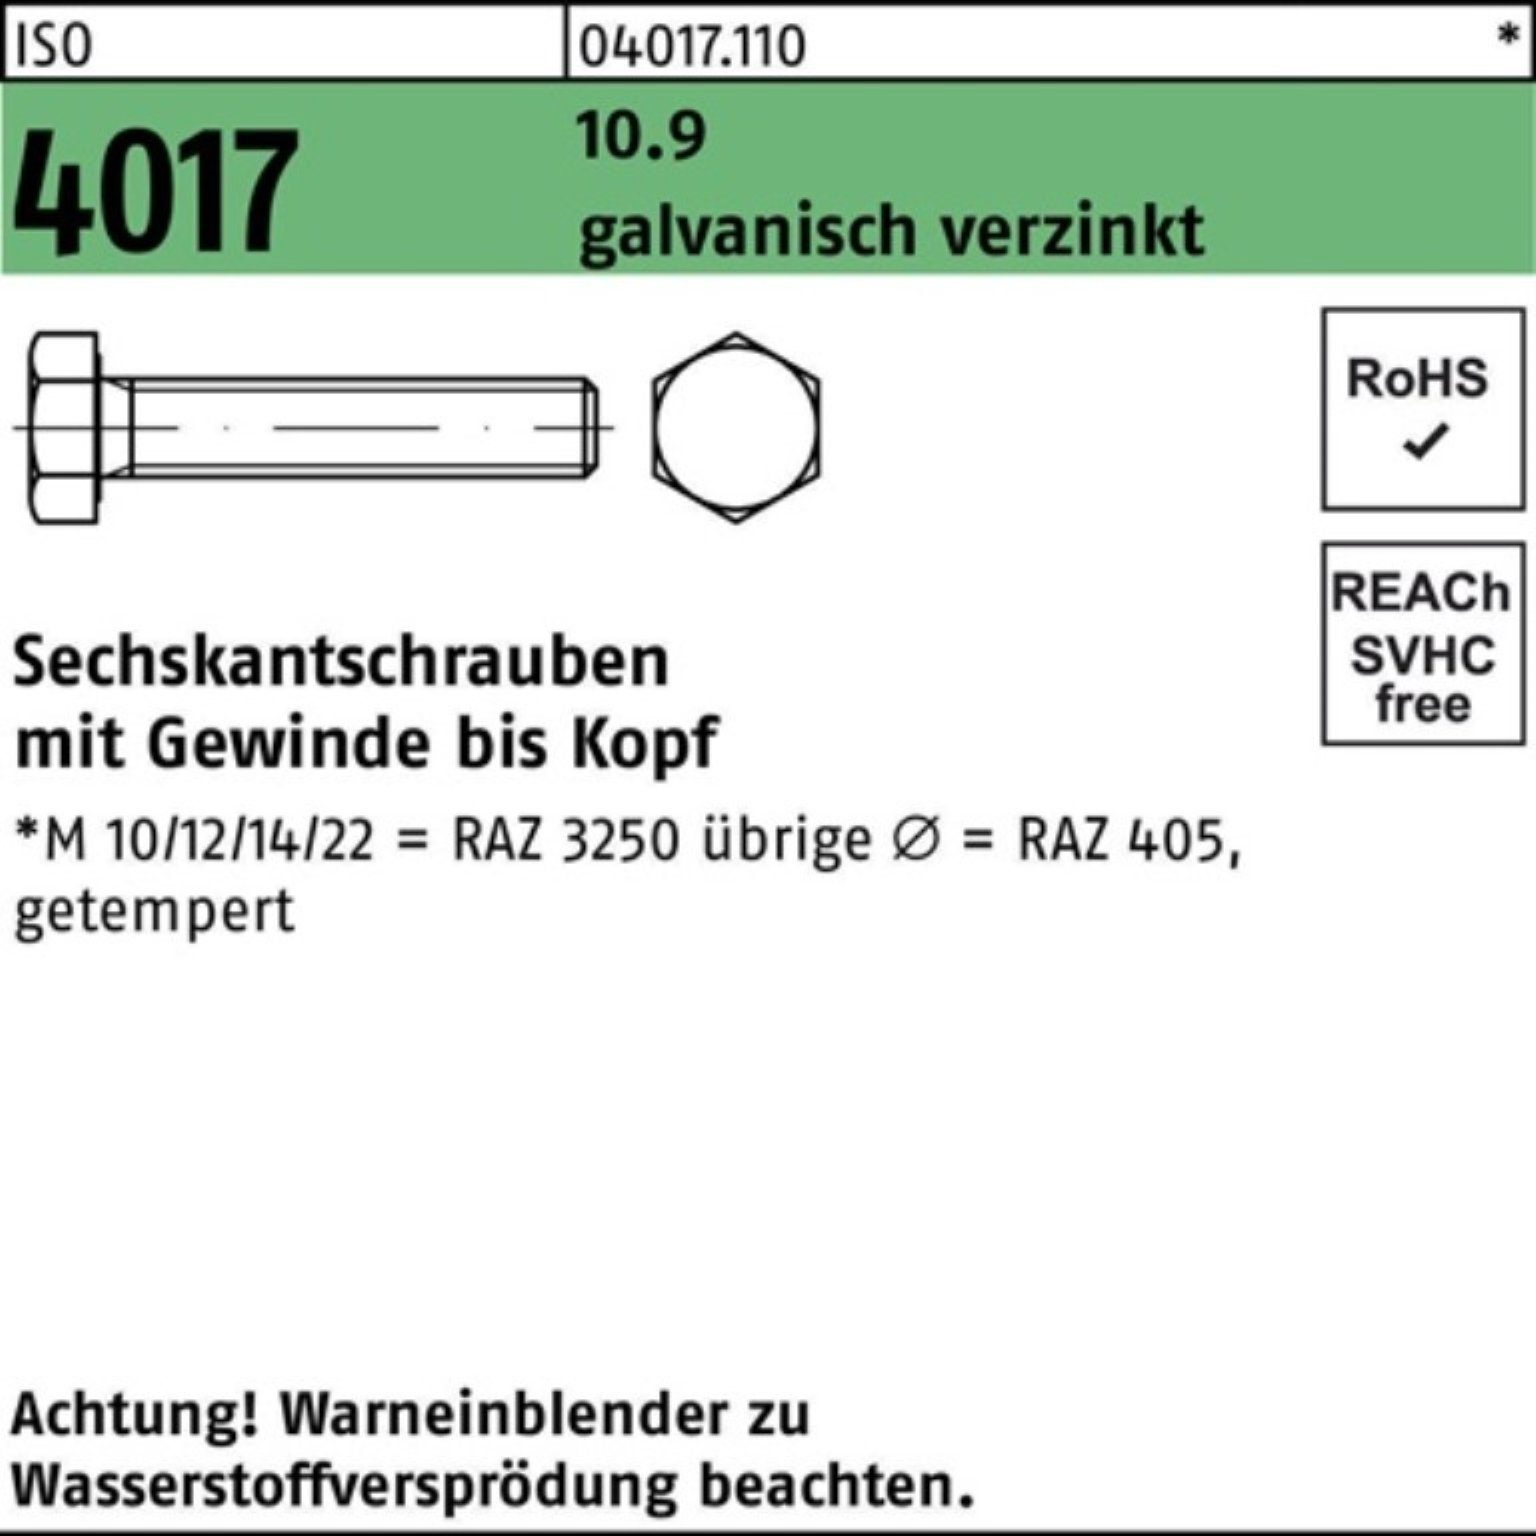 Bufab Sechskantschraube 100er M12x 10.9 4017 S VG 30 galv.verz. ISO 100 Sechskantschraube Pack